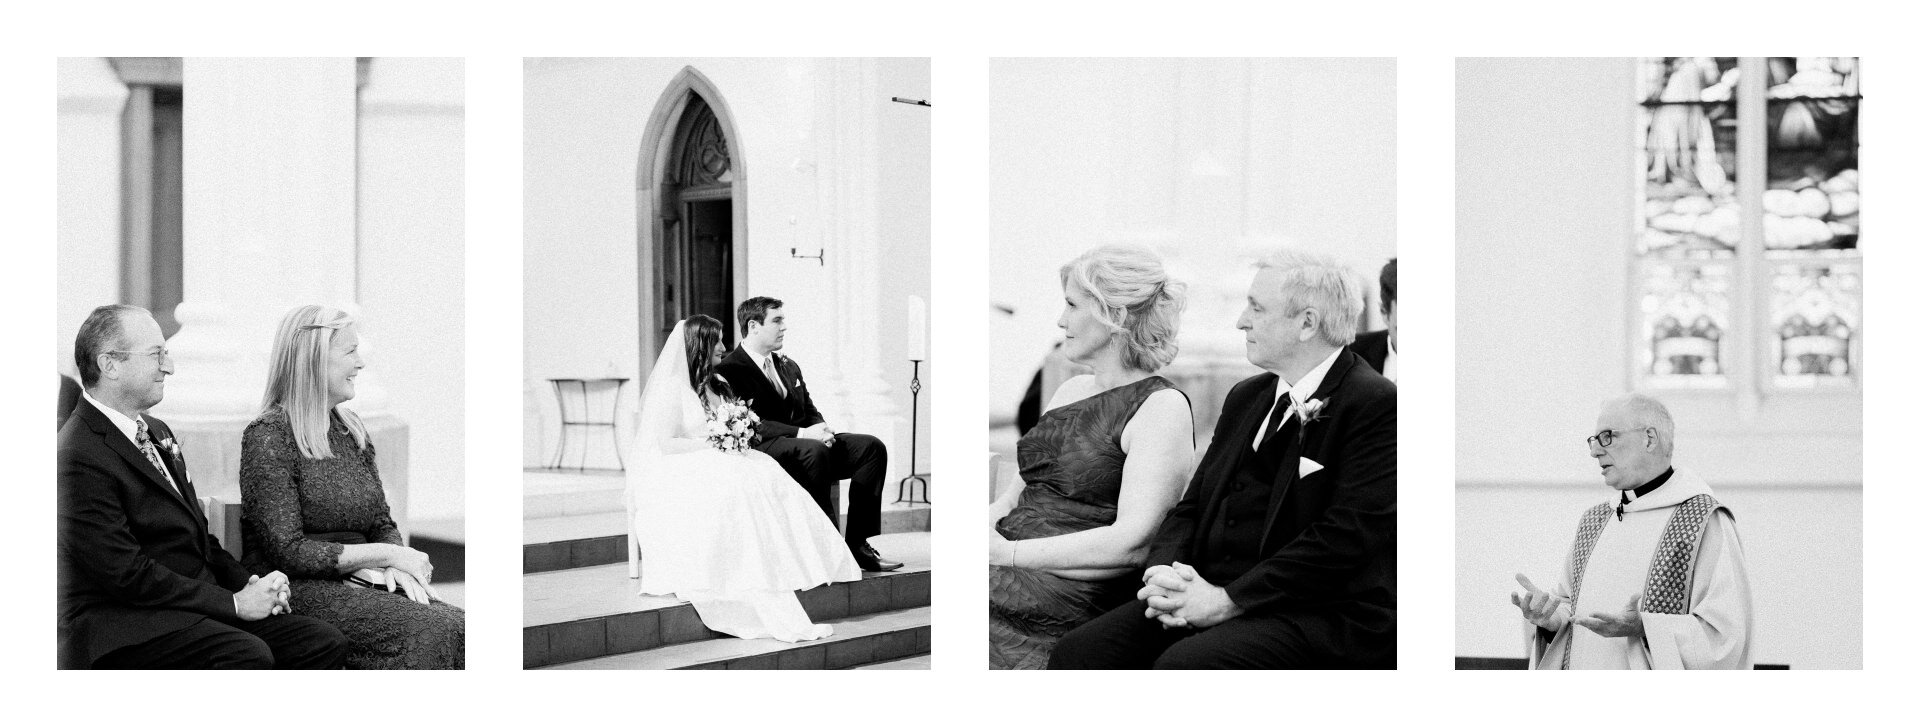 Cleveland Micro Wedding Photographer 1 23.jpg